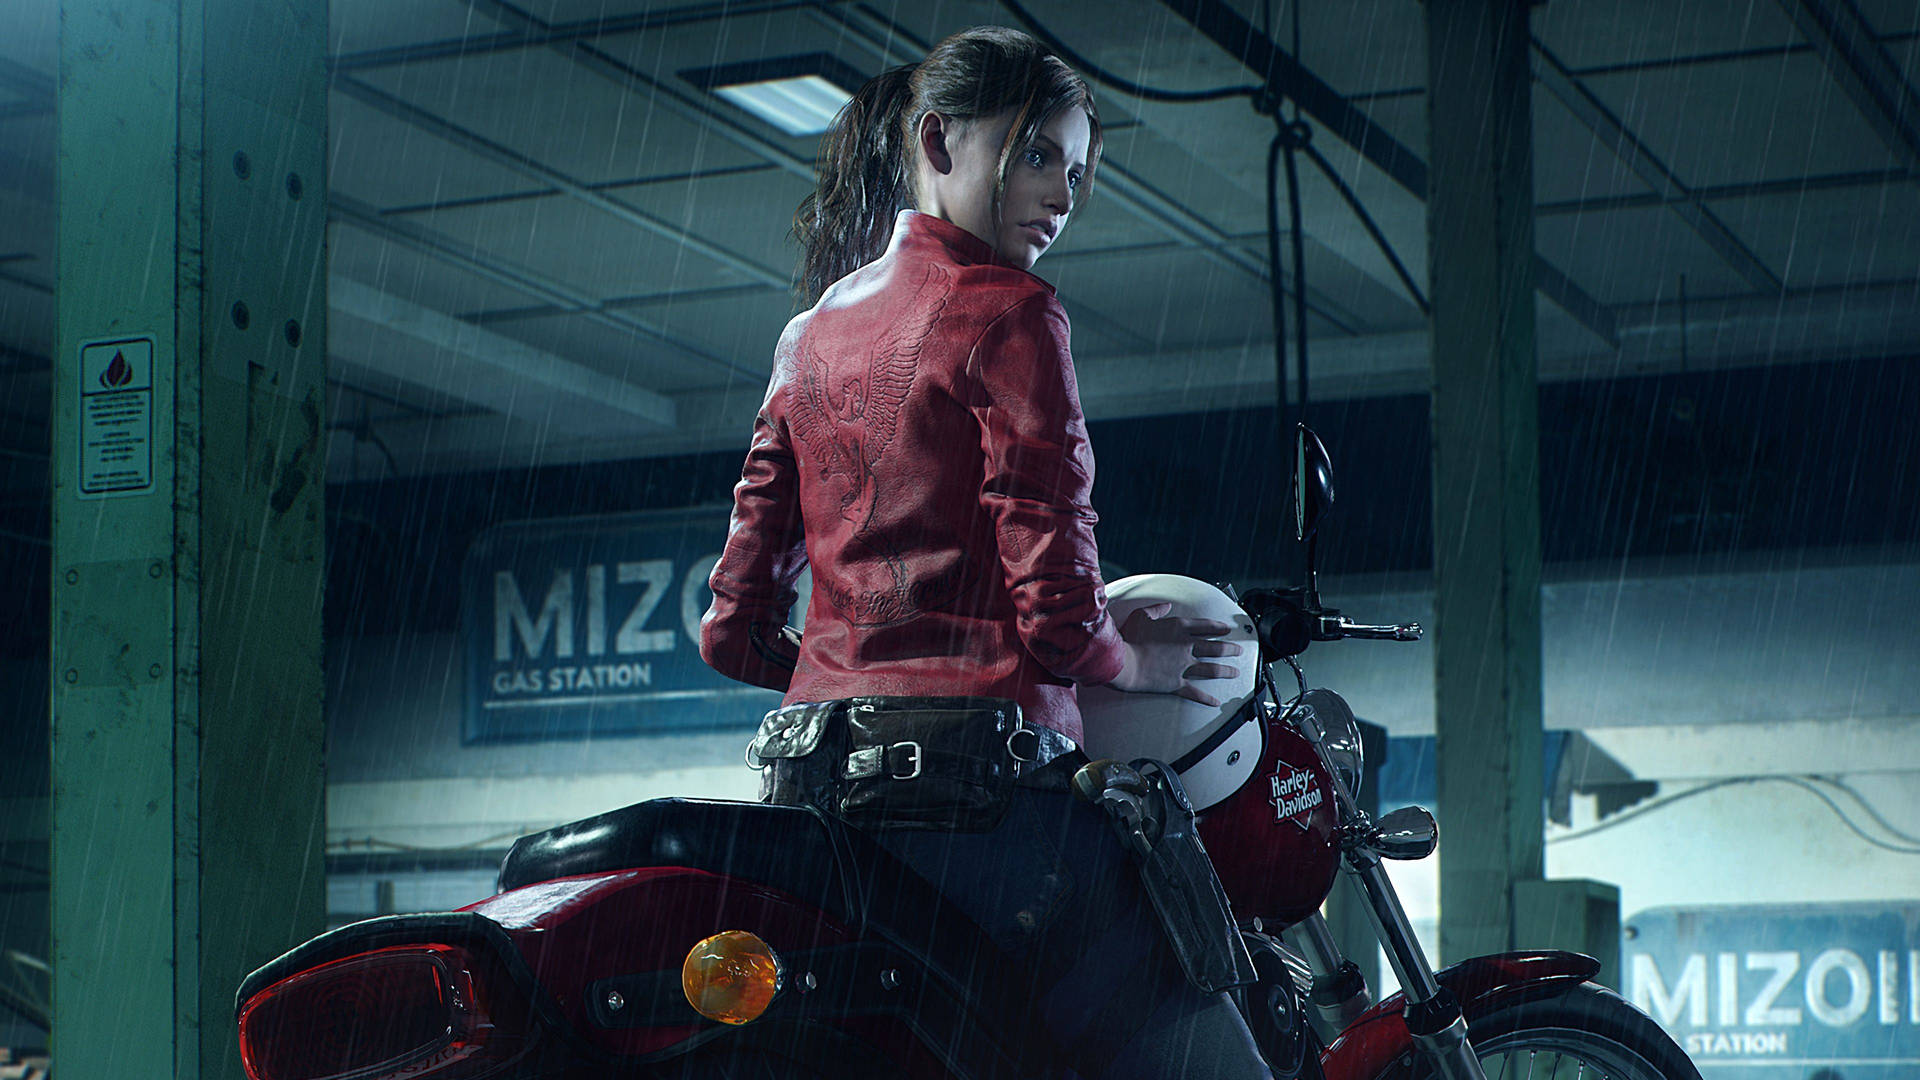 Claire Harley Davidson Resident Evil 2 Remake Background